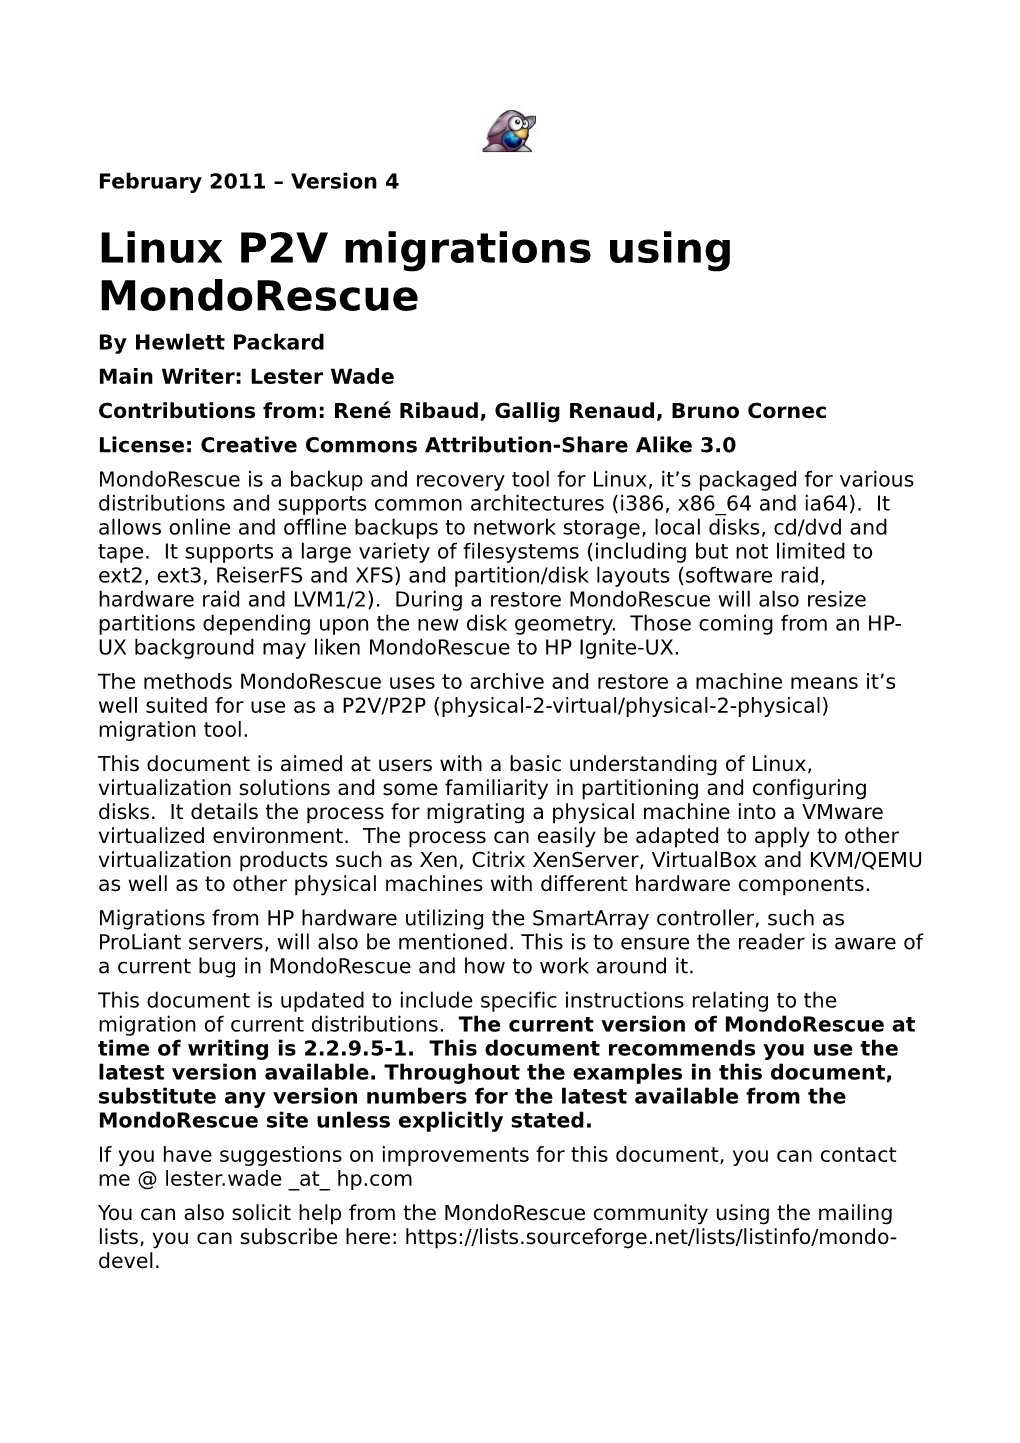 Linux P2V Migrations Using Mondorescue